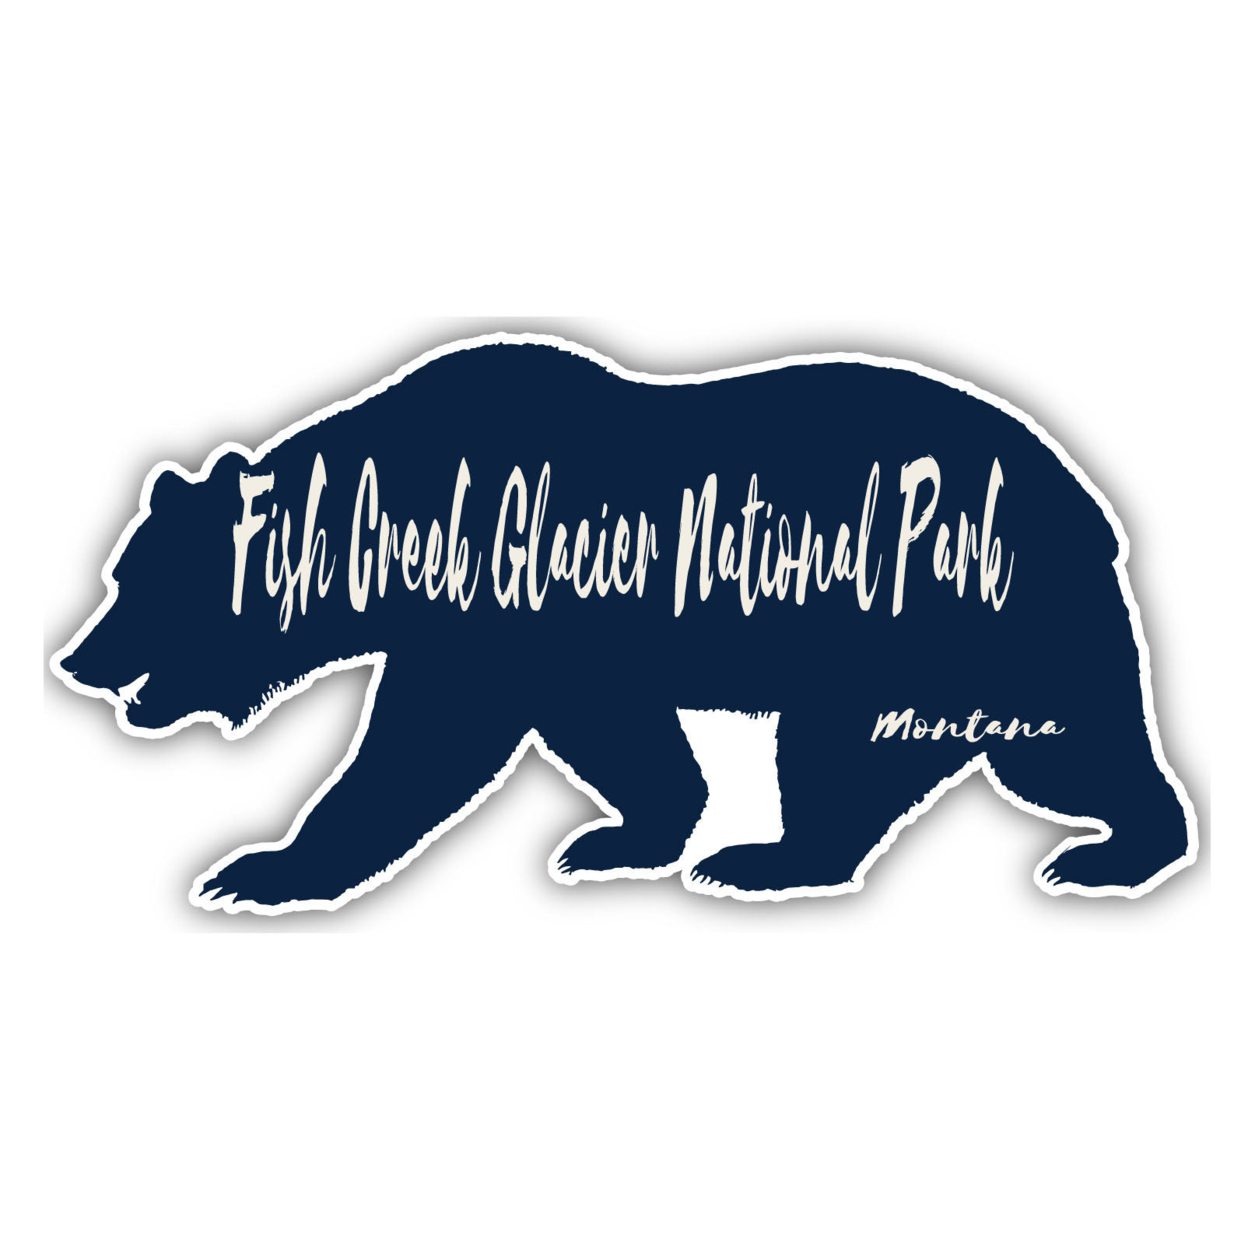 Fish Creek Glacier National Park Montana Souvenir Decorative Stickers (Choose Theme And Size) - 4-Pack, 10-Inch, Bear